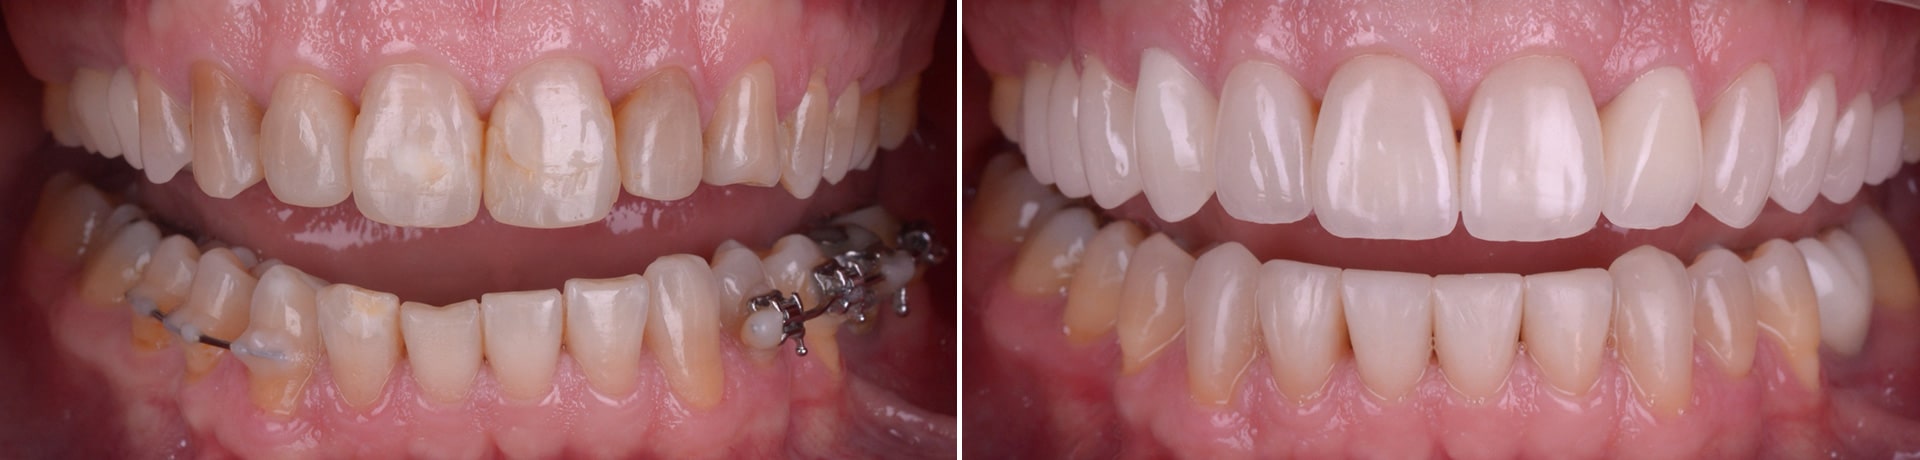 reabilitare complexa ortodontie fatete dentare coroane dentare punti dentare implanturi dentare reconstructii compozit gutiera atm clinica dentara timisoara stomatologie rugina